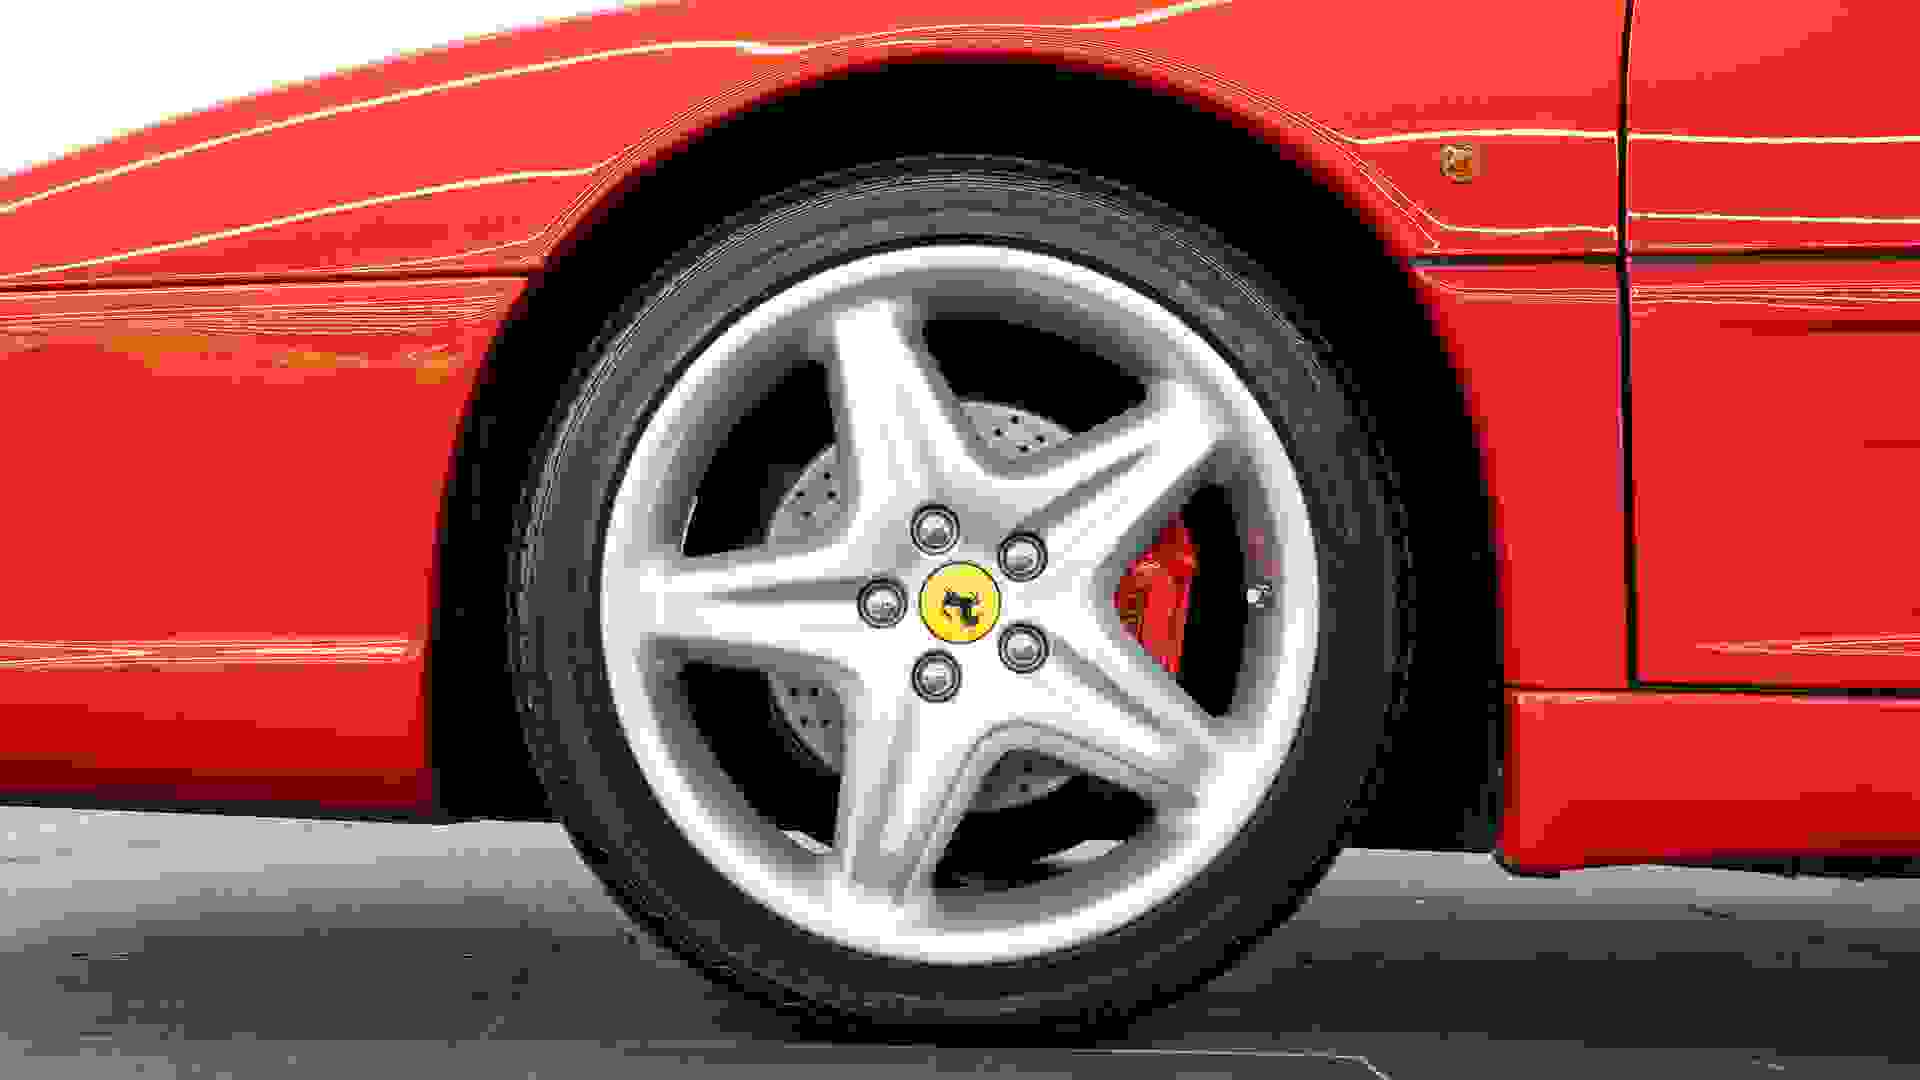 Ferrari 355 Photo 021e0ca7-87c7-4cd2-81b1-d12d9b325596.jpg